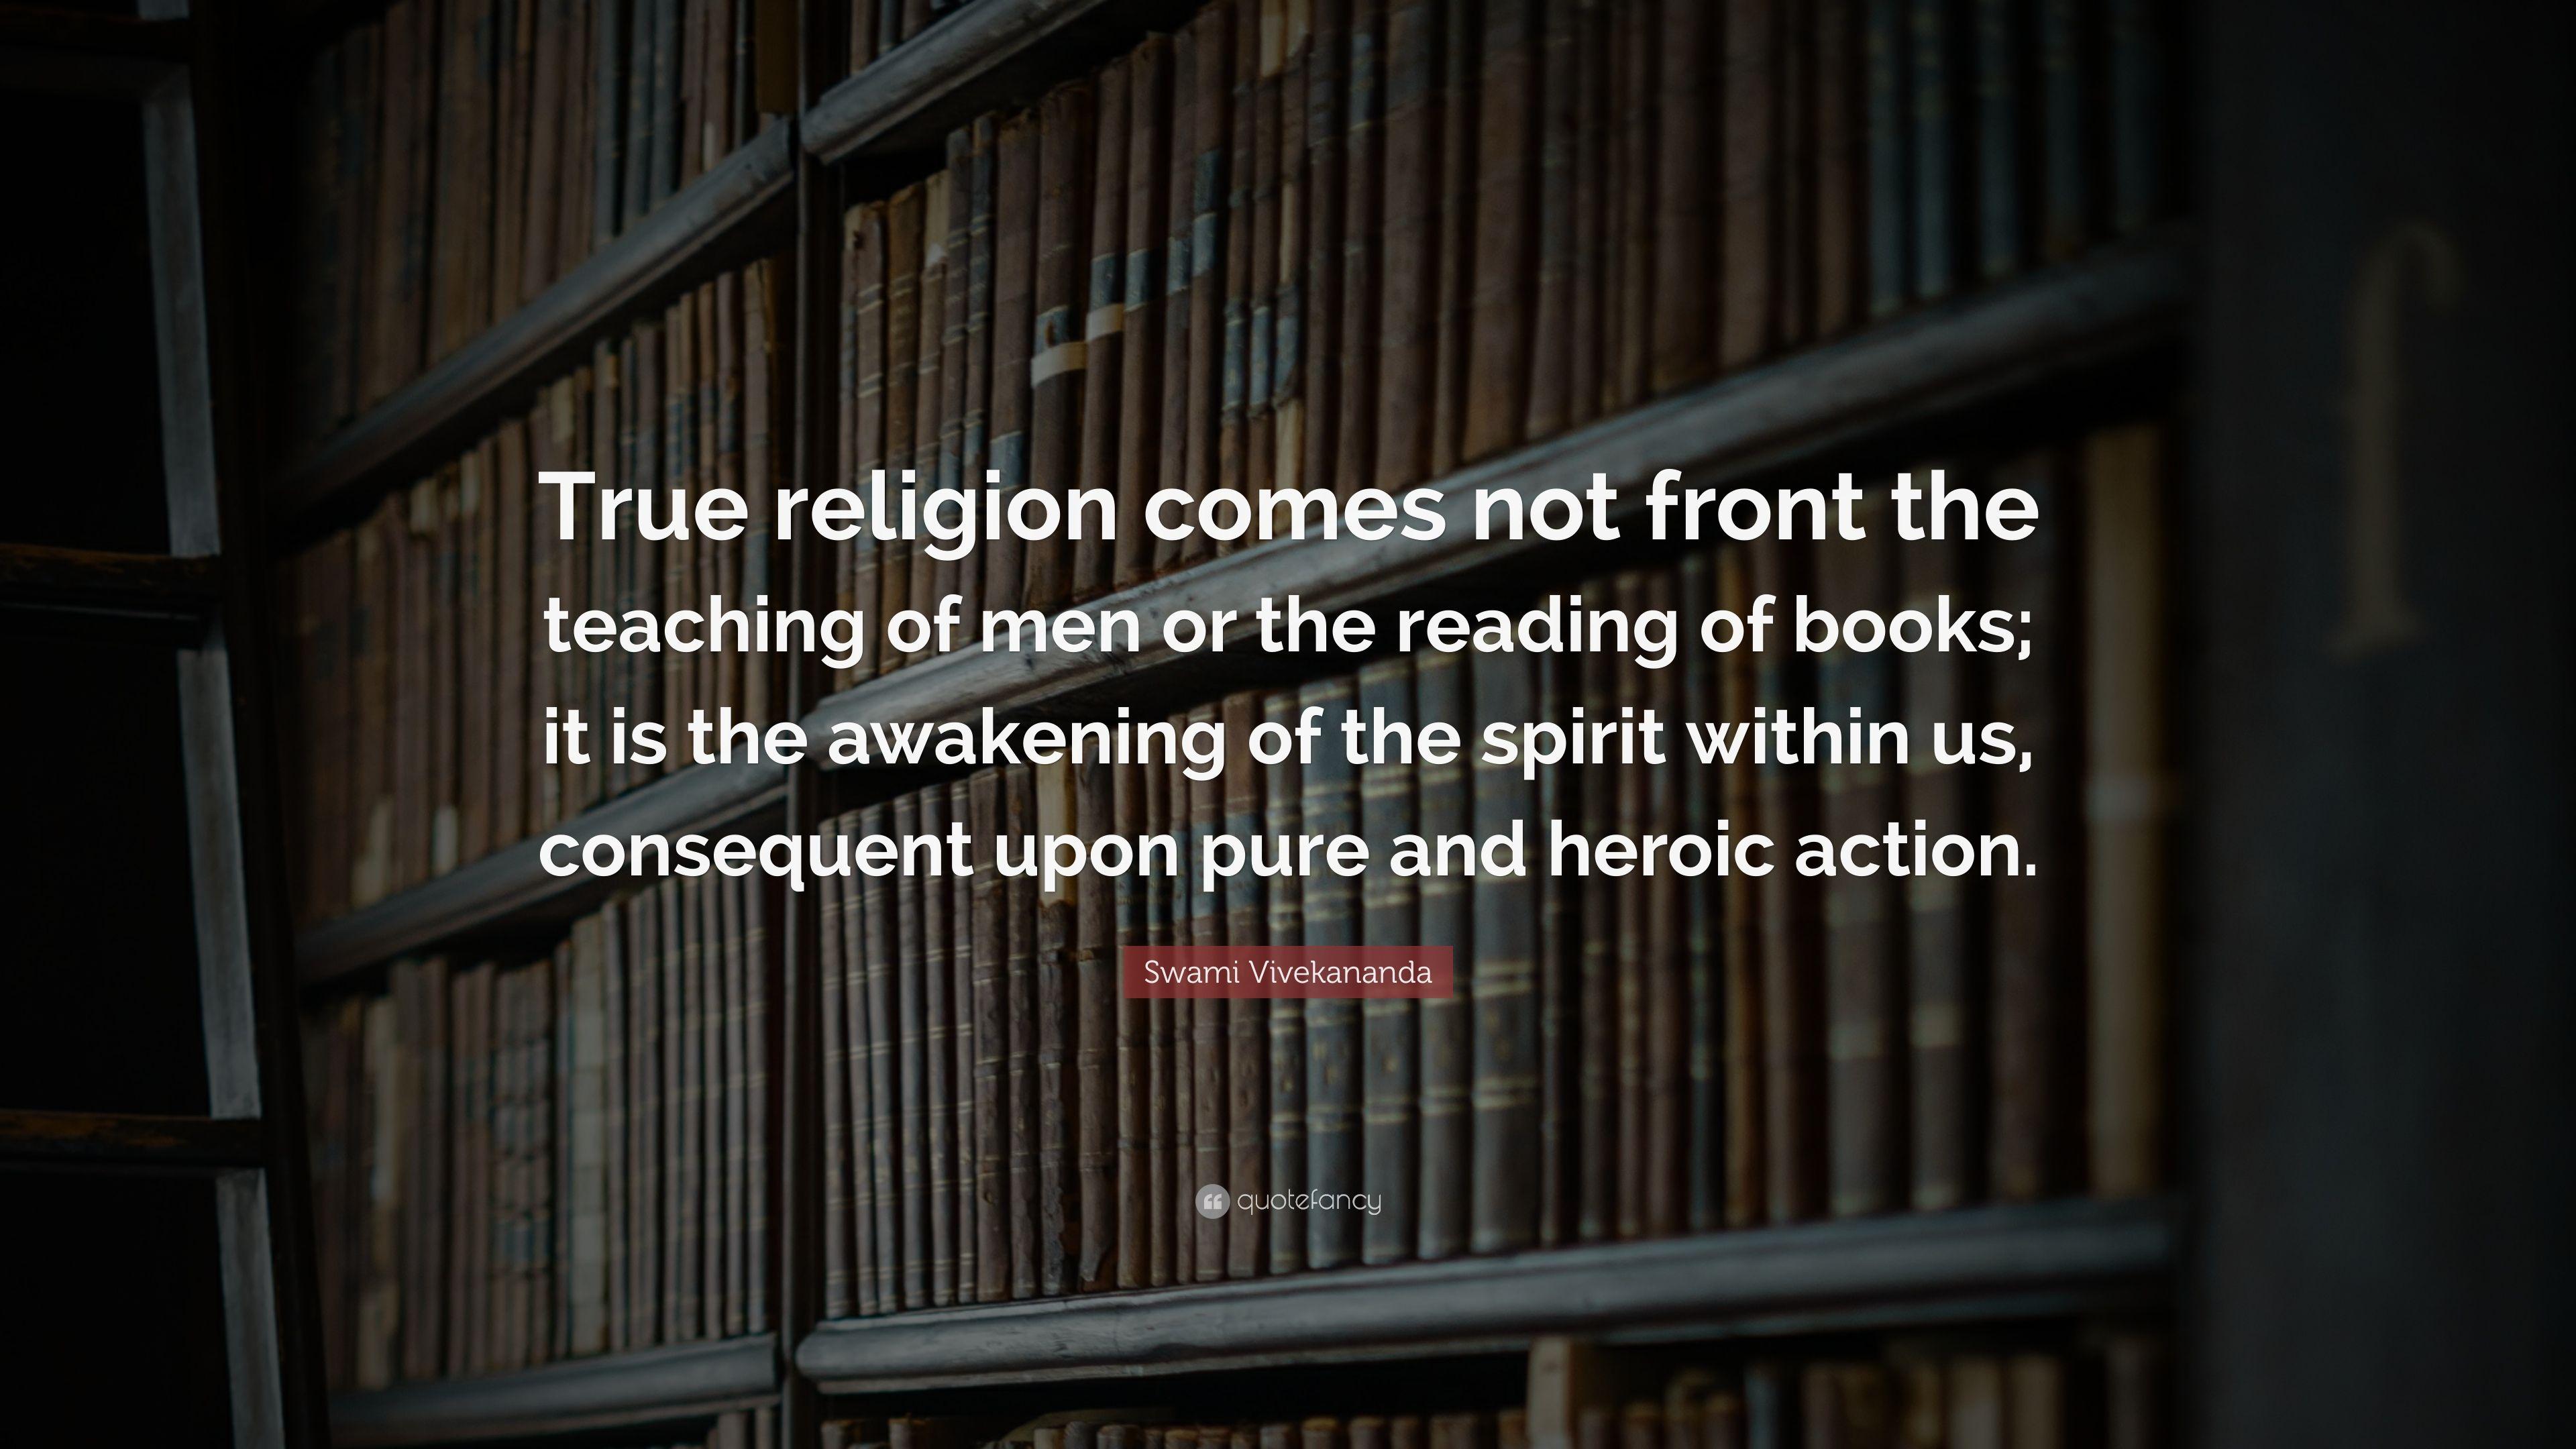 Swami Vivekananda Quote: “True religion comes not front